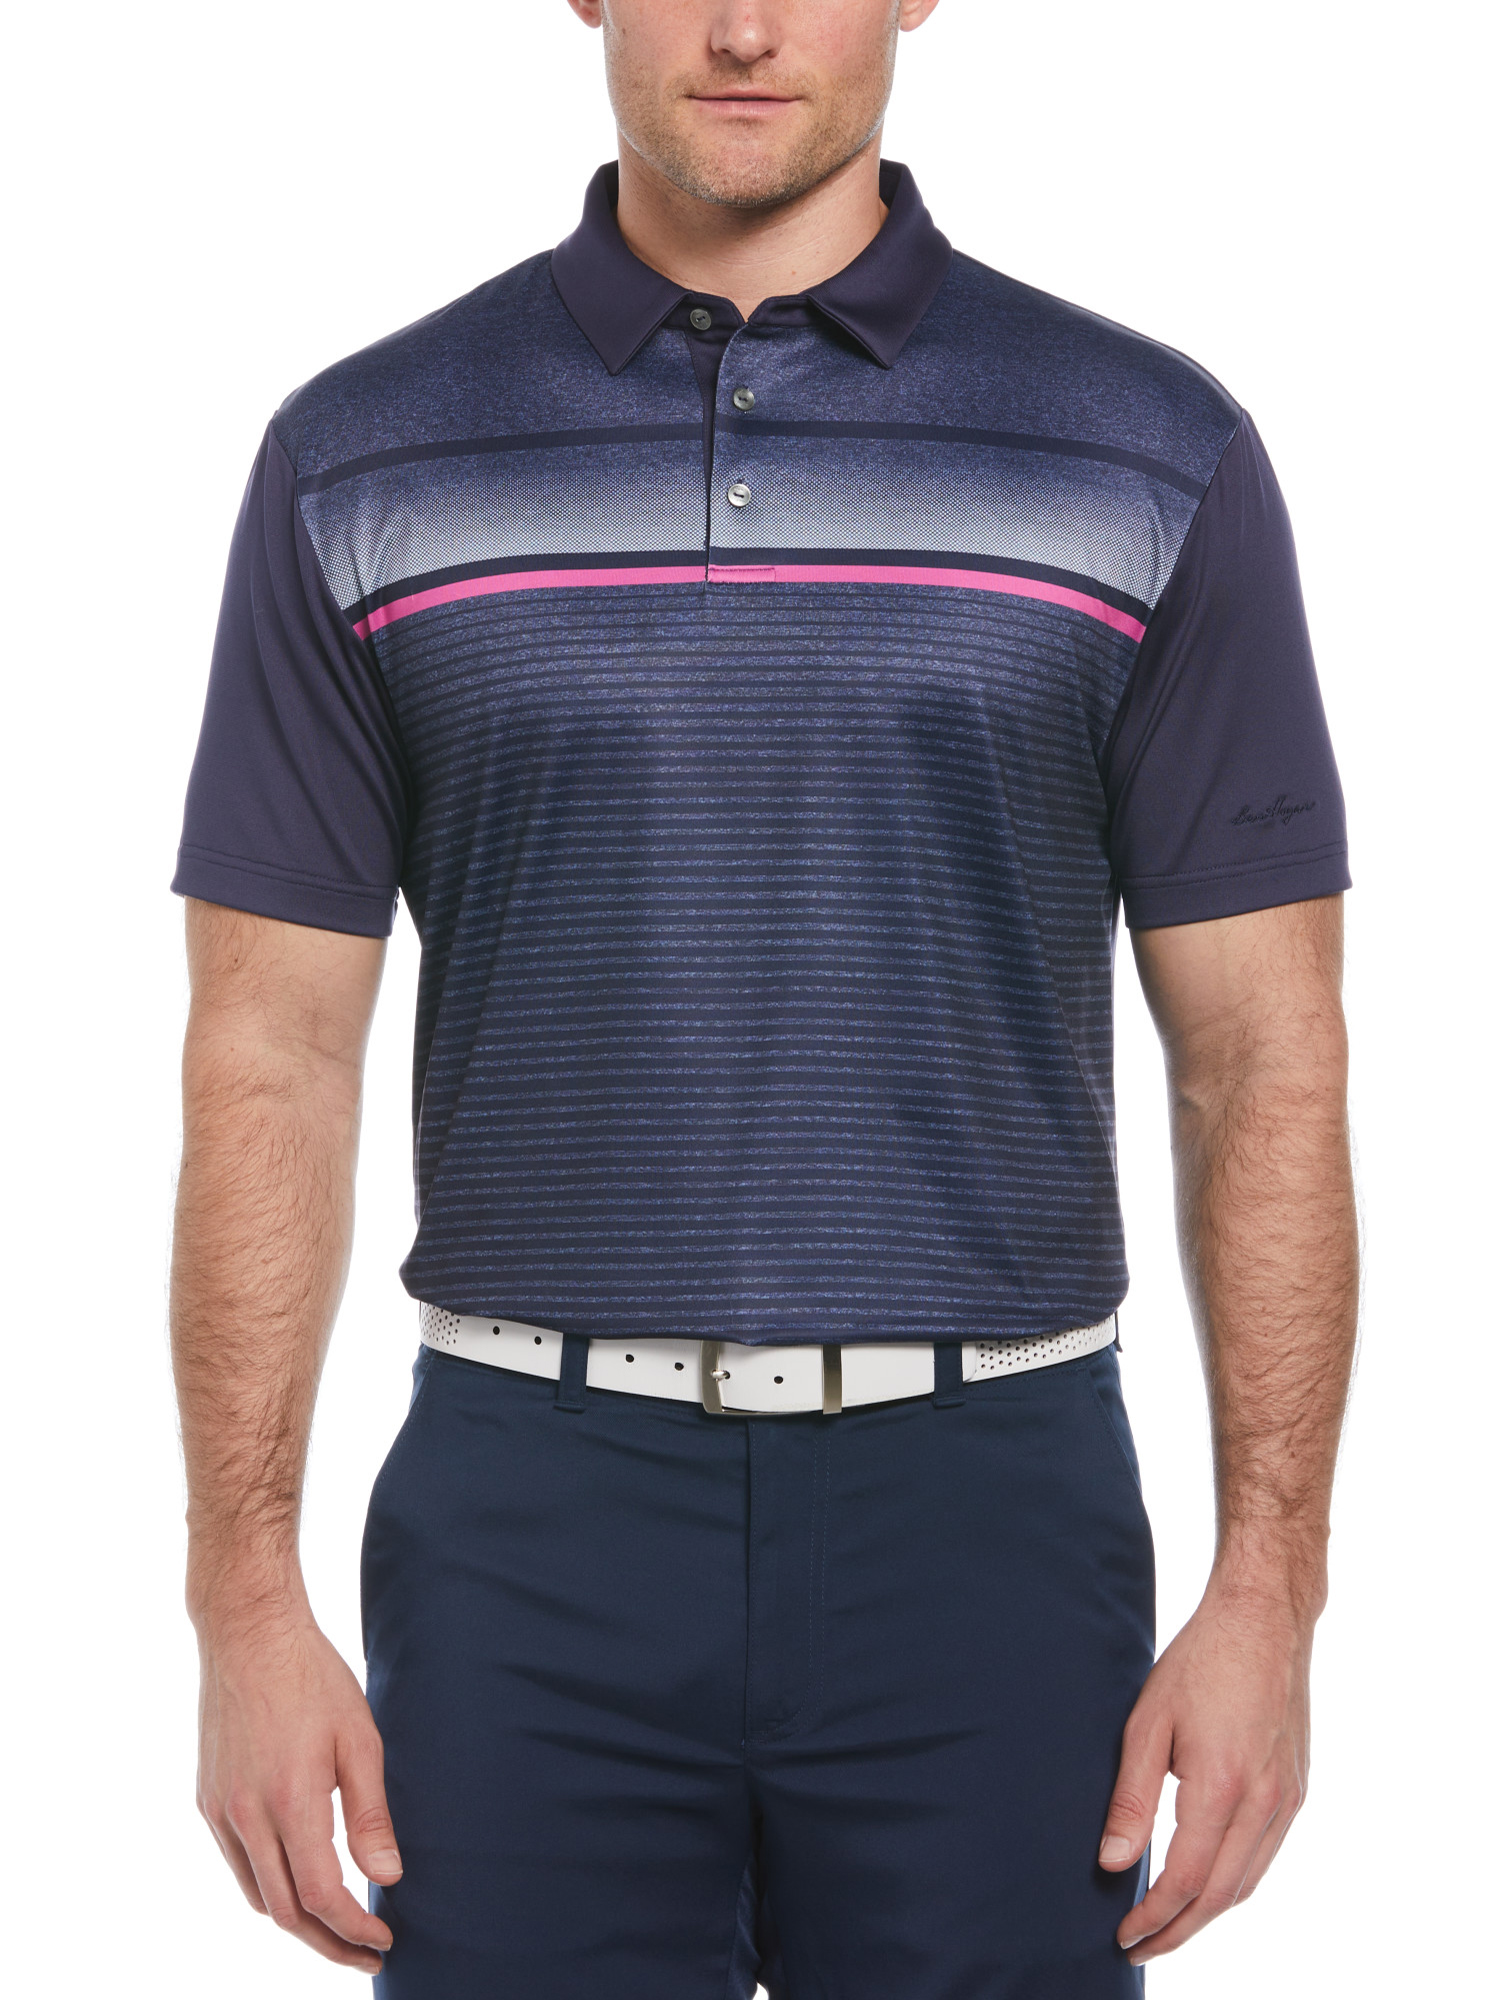 Ben Hogan Men's and Big Men's Gradient Chest Stripe Golf Polo Shirt, up to Size 5XL